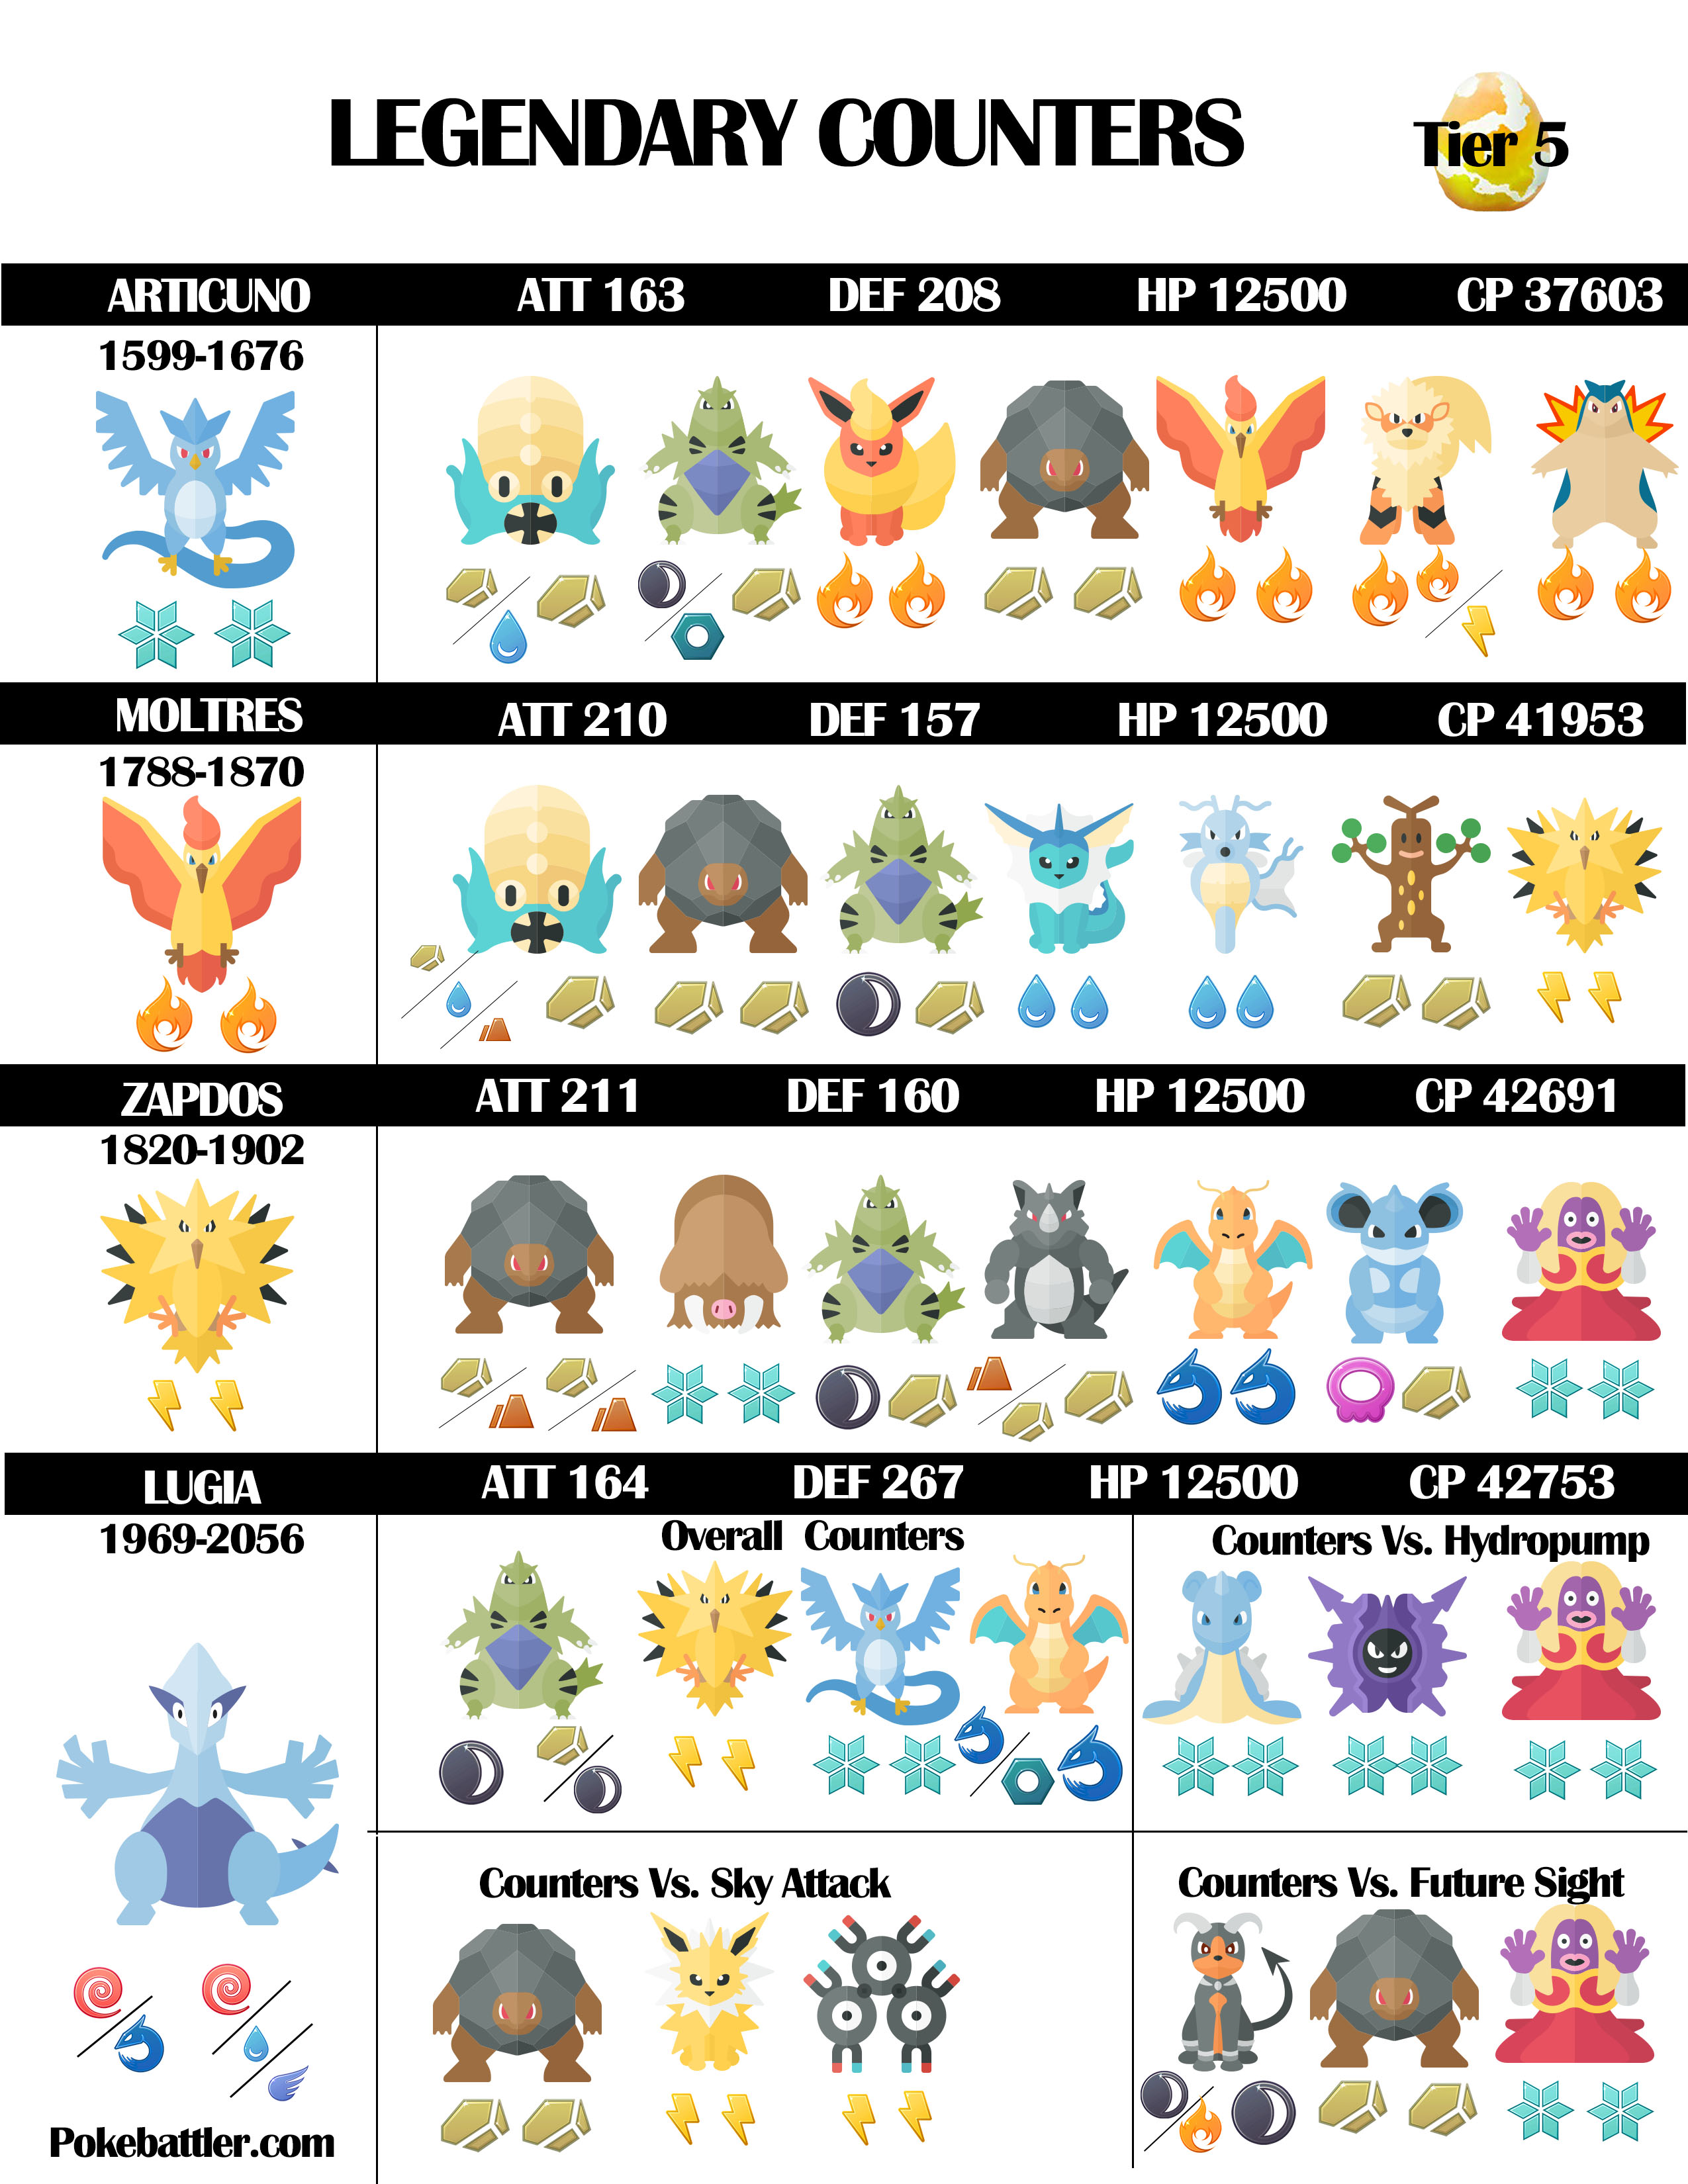 51 Pokémon Go Raids and Lengendary ideas